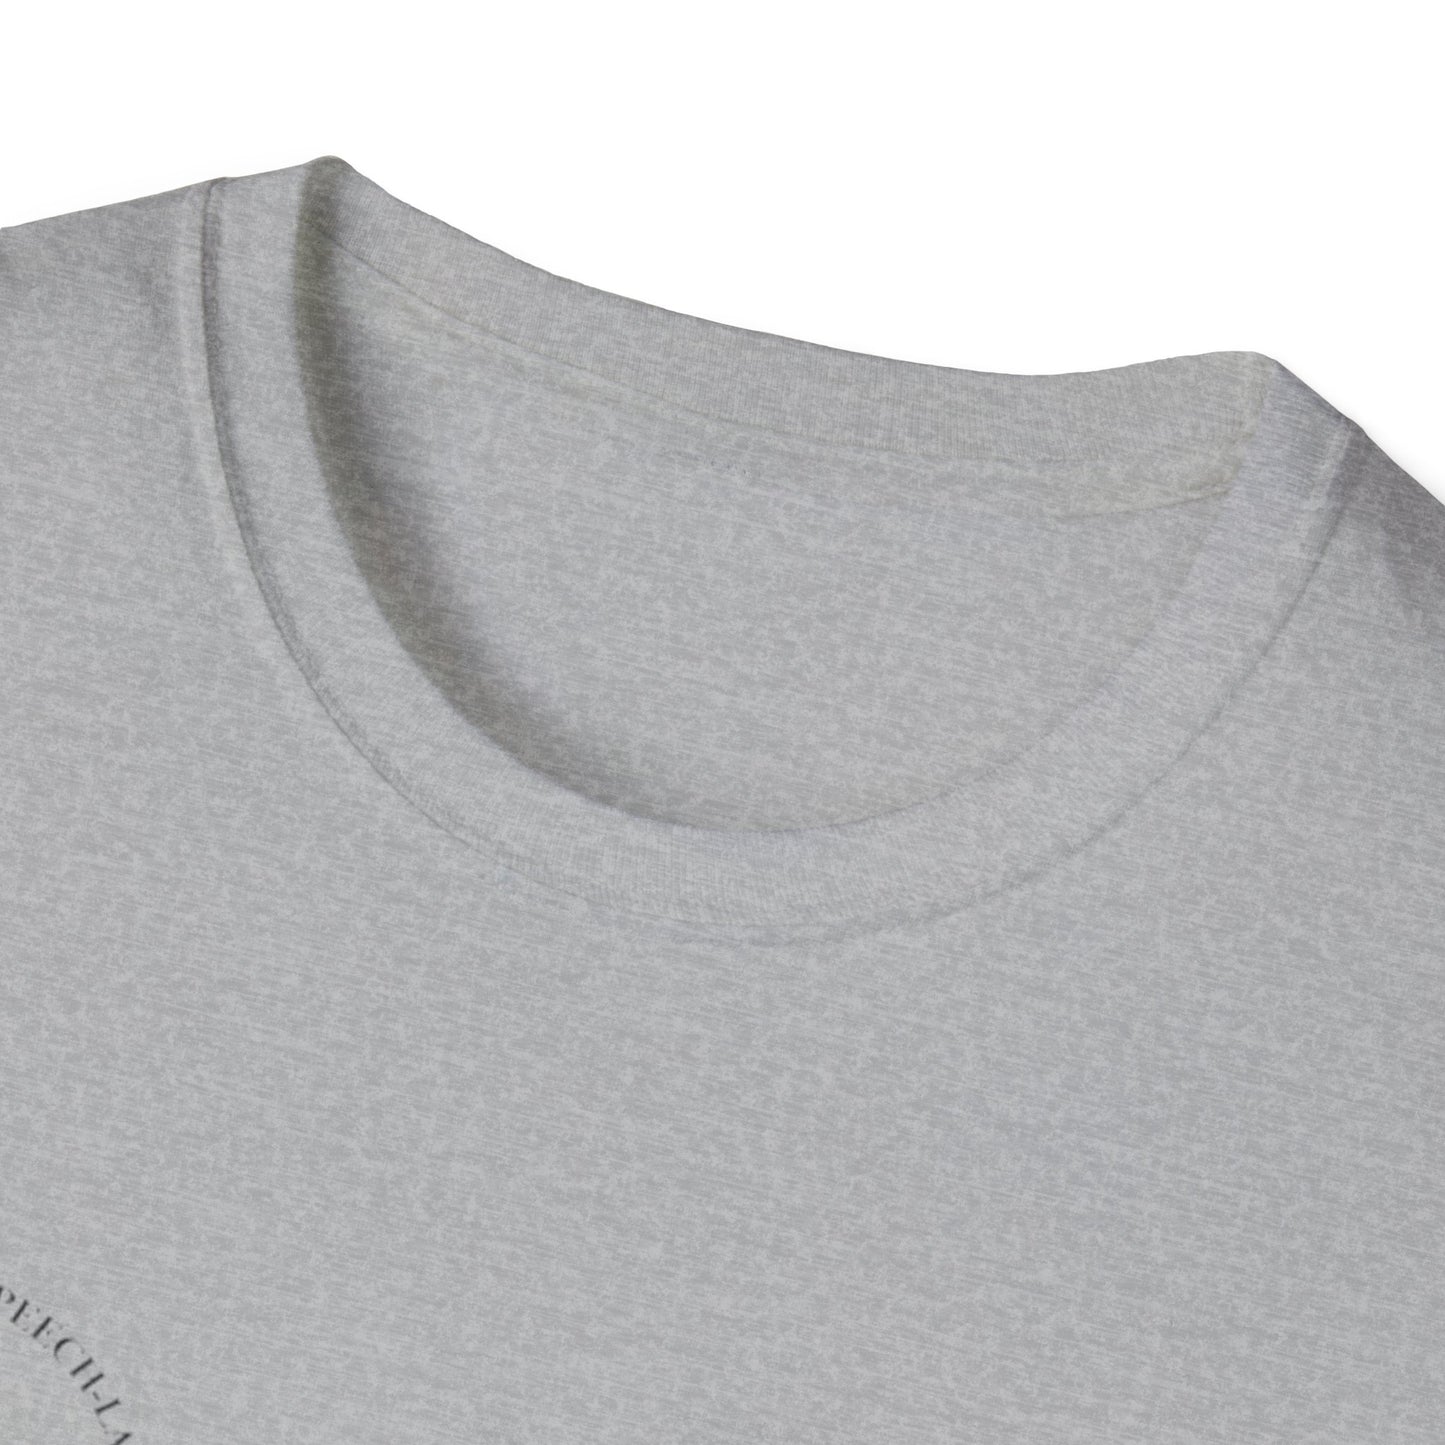 Communicate Unisex Softstyle T-Shirt